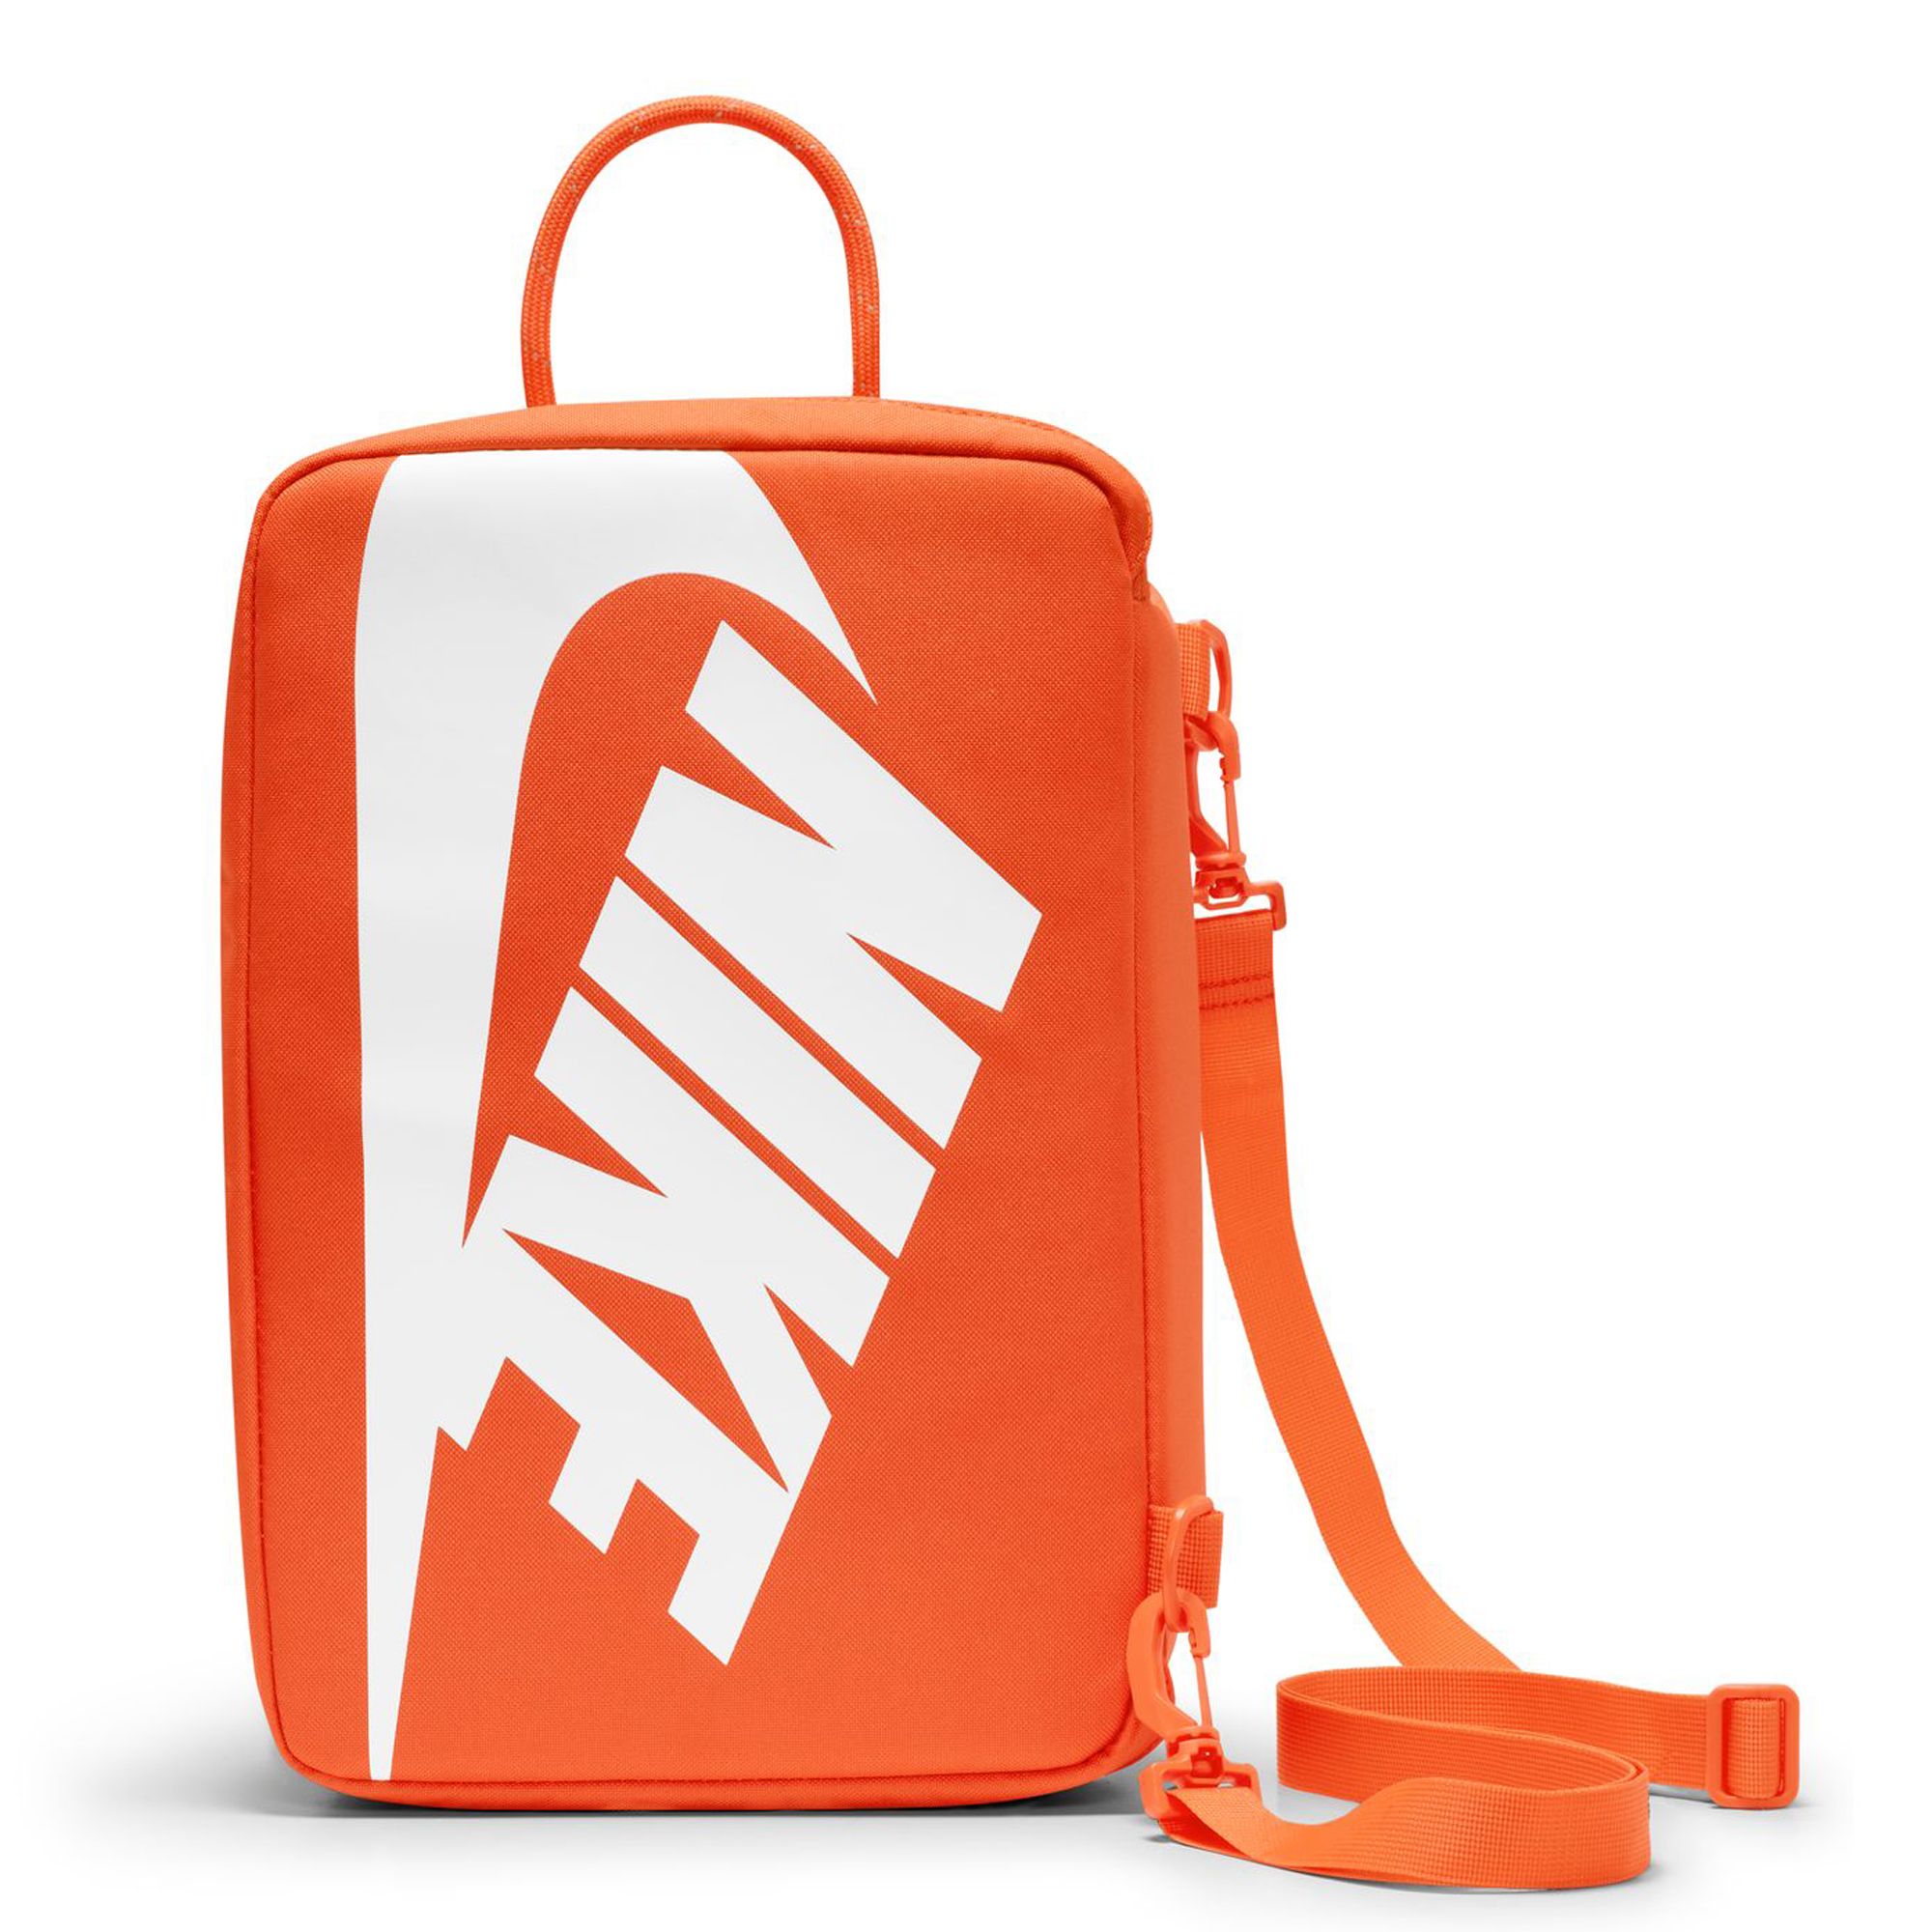 Nike Shoebox Bag - Orange / White (Review) 